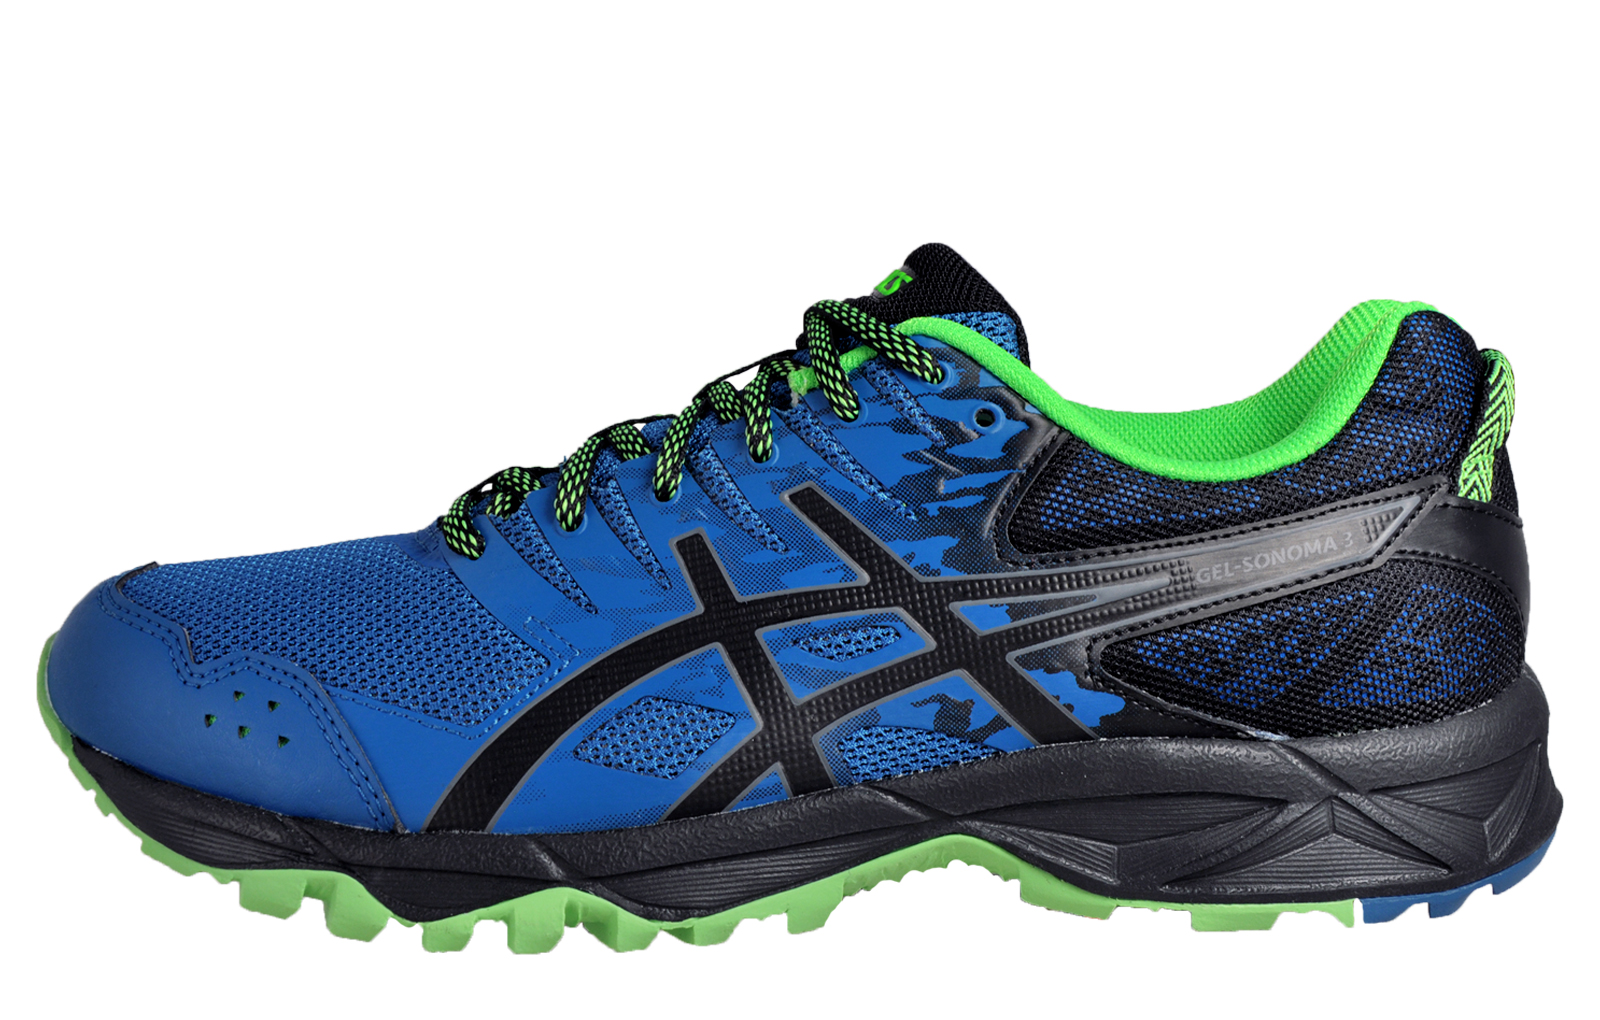 Asics Gel Sonoma 3 Mens All Terrain Outdoor Trail Running Shoes Blue | eBay